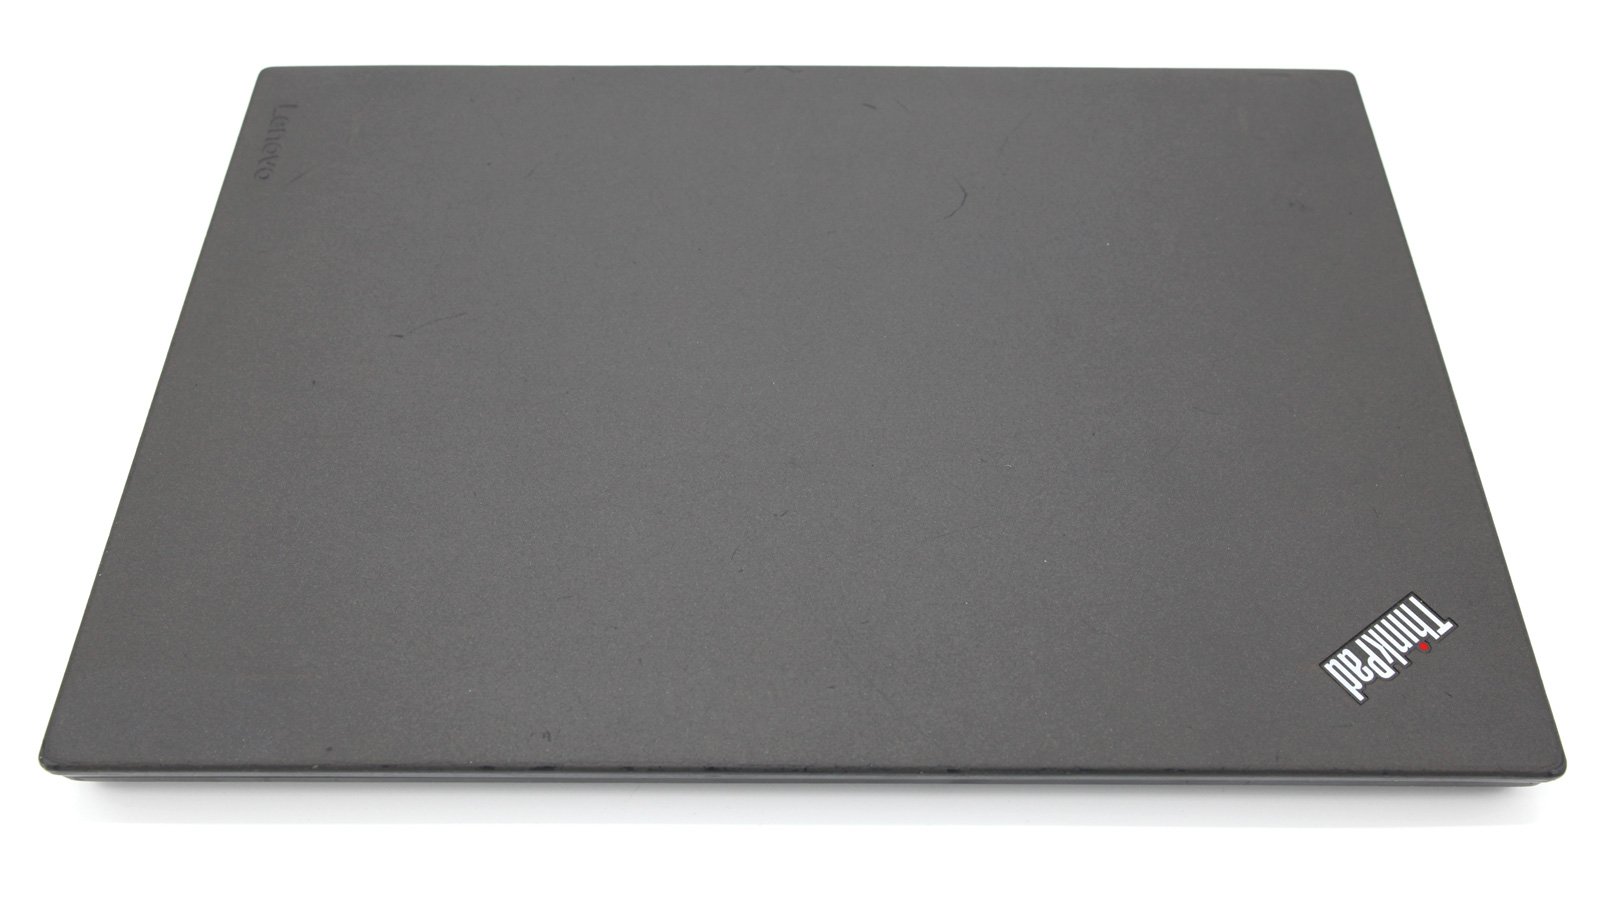 Lenovo ThinkPad T460 14" Laptop: Core i5 6th Gen 8GB RAM 240GB SSD Warranty - CruiseTech